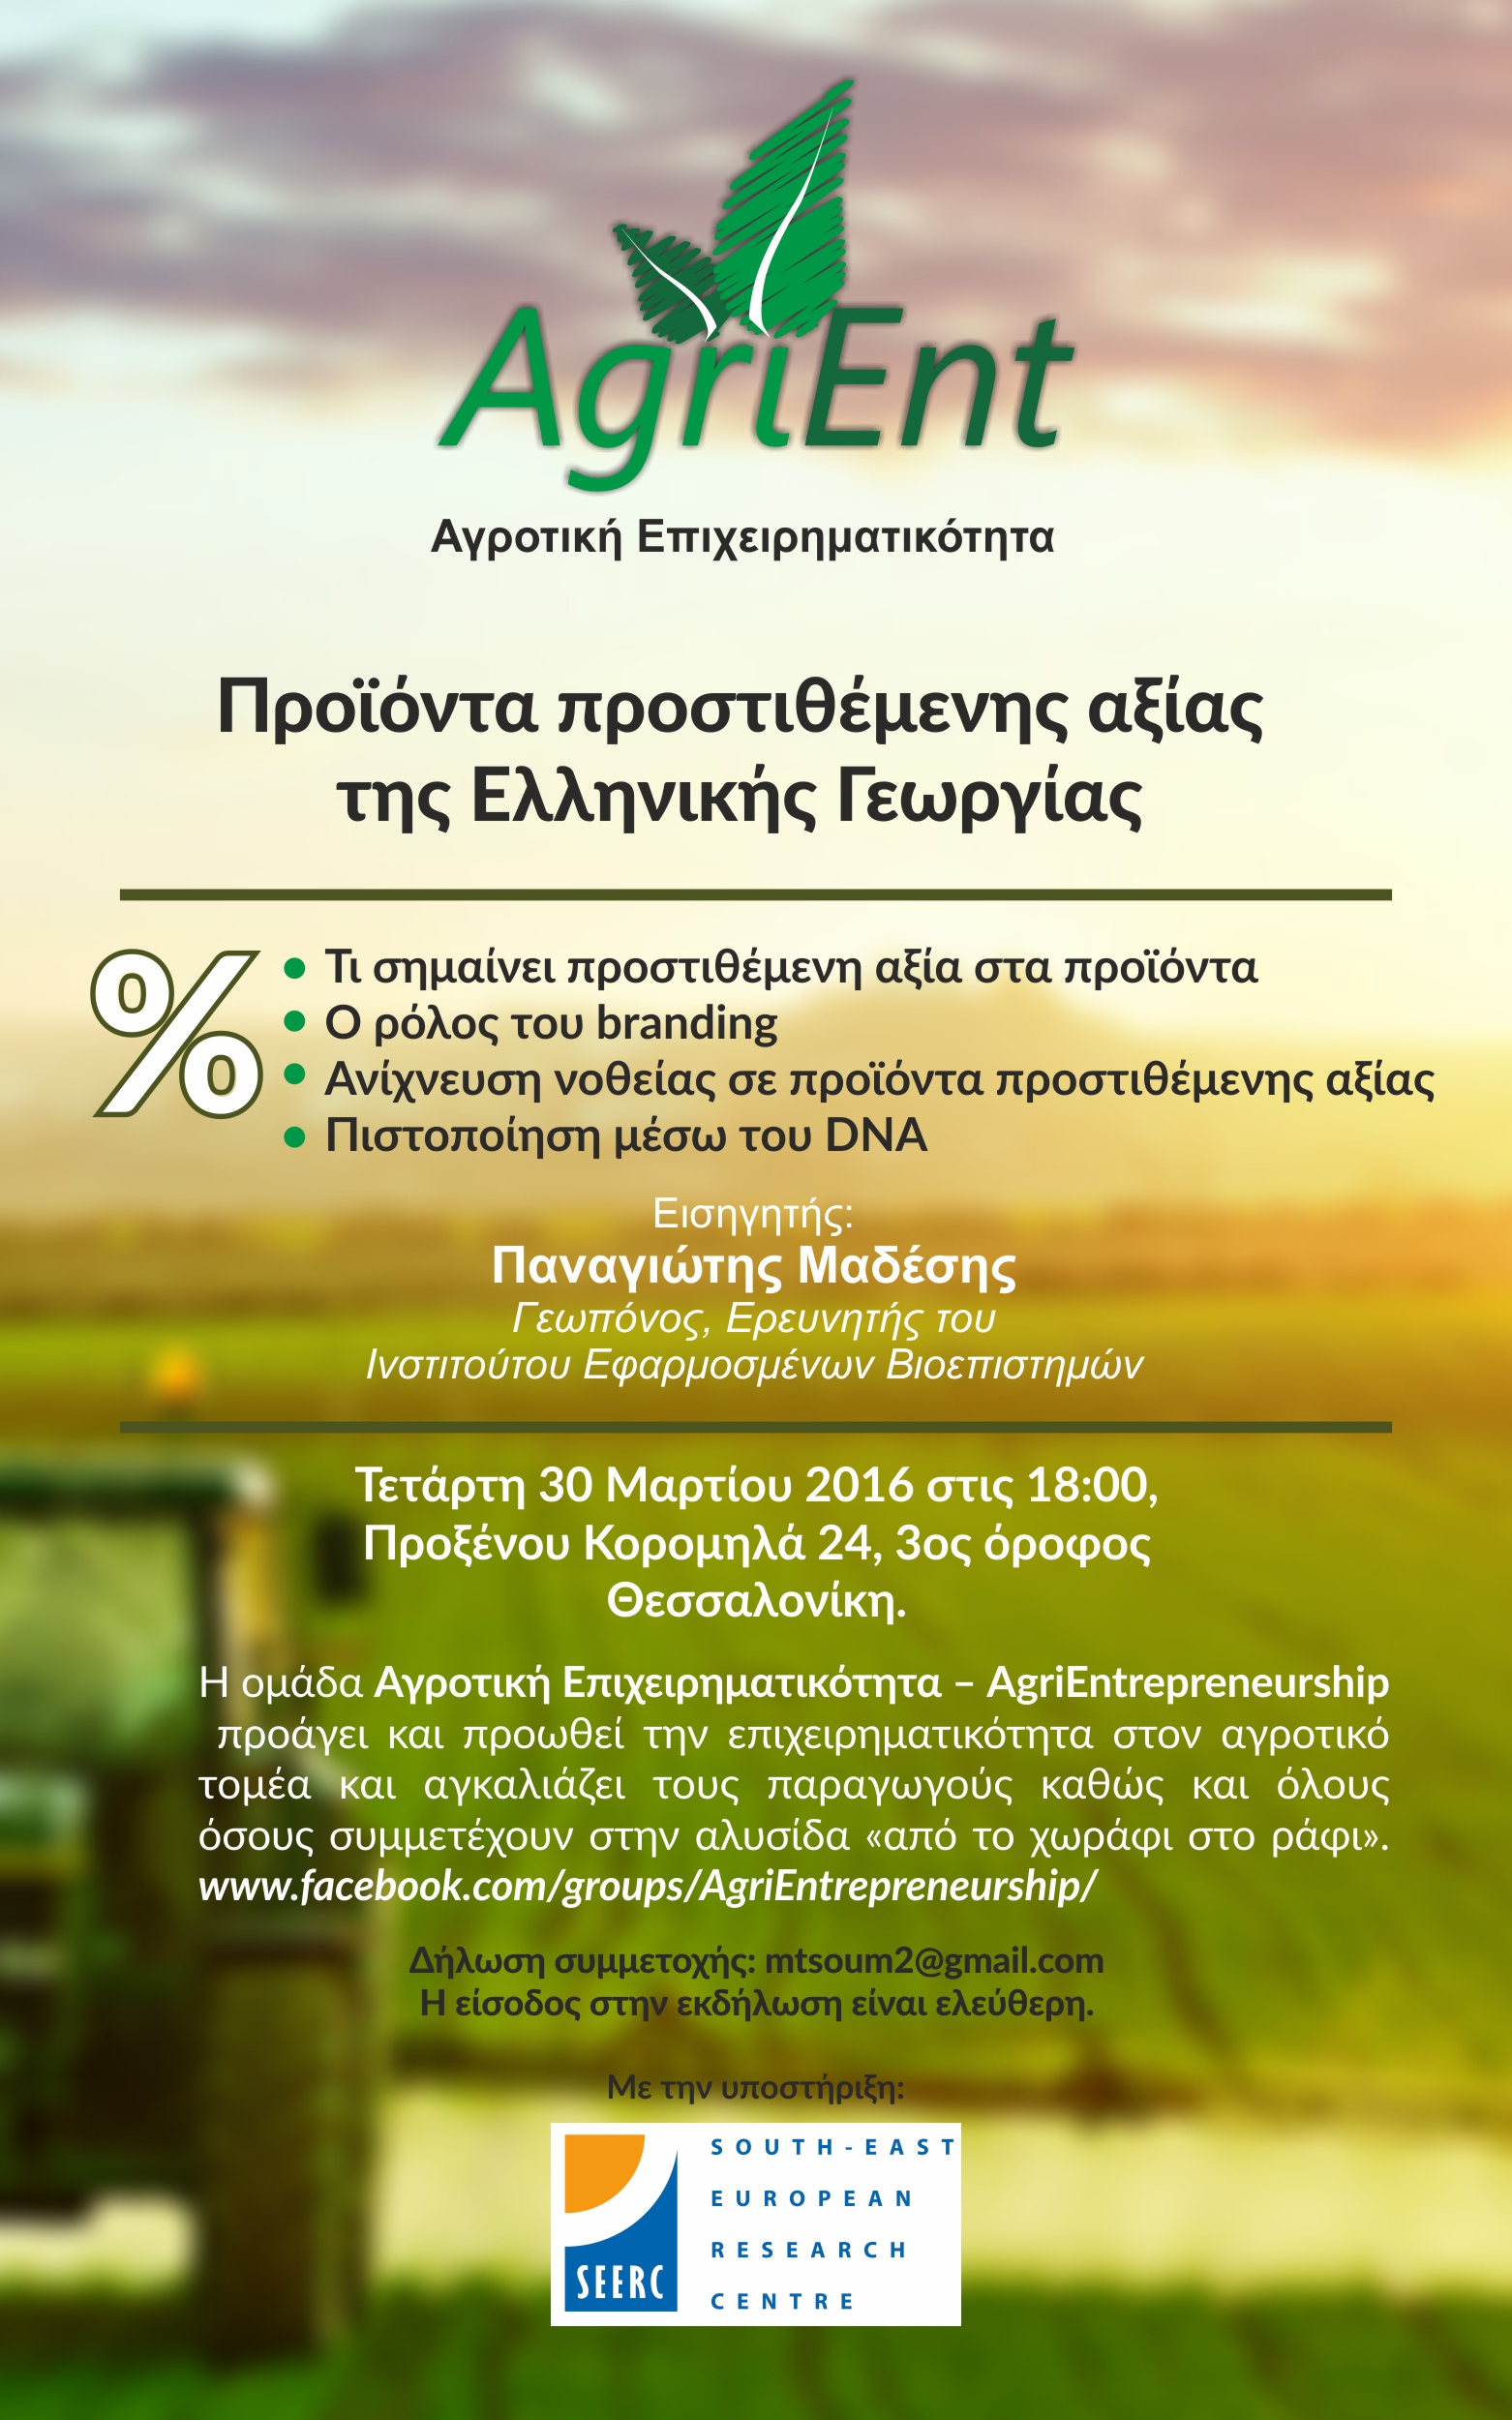 AgriEnt Αγροτική Επιχειρηματικότητα: Προϊόντα προστιθέμενης αξίας της Ελληνικής Γεωργίας